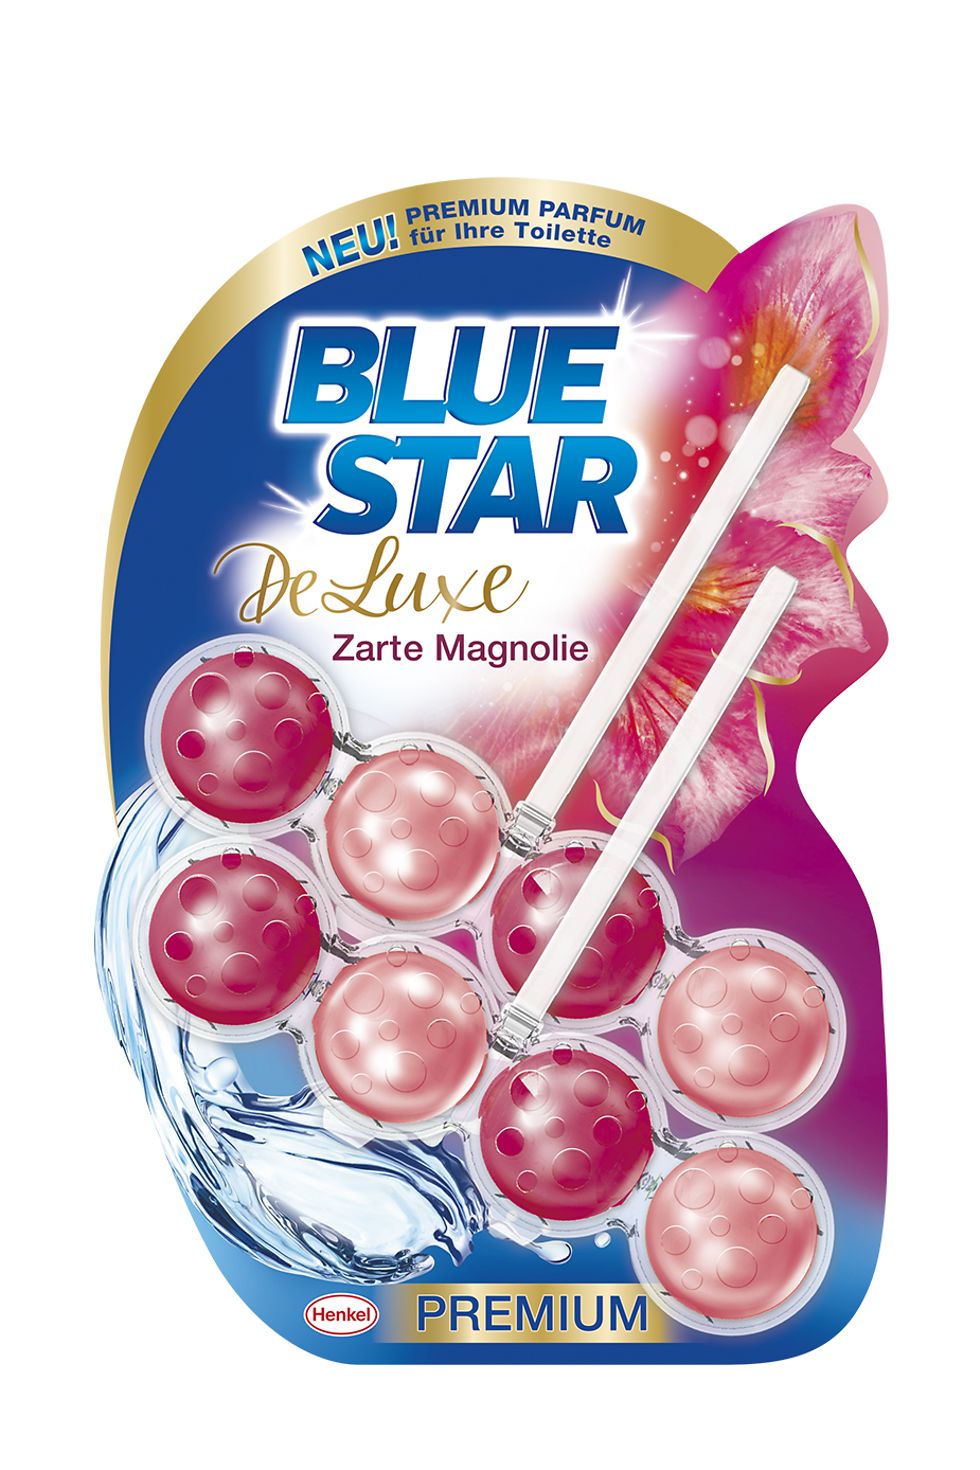 Blue Star DeLuxe „Zarte Magnolie“